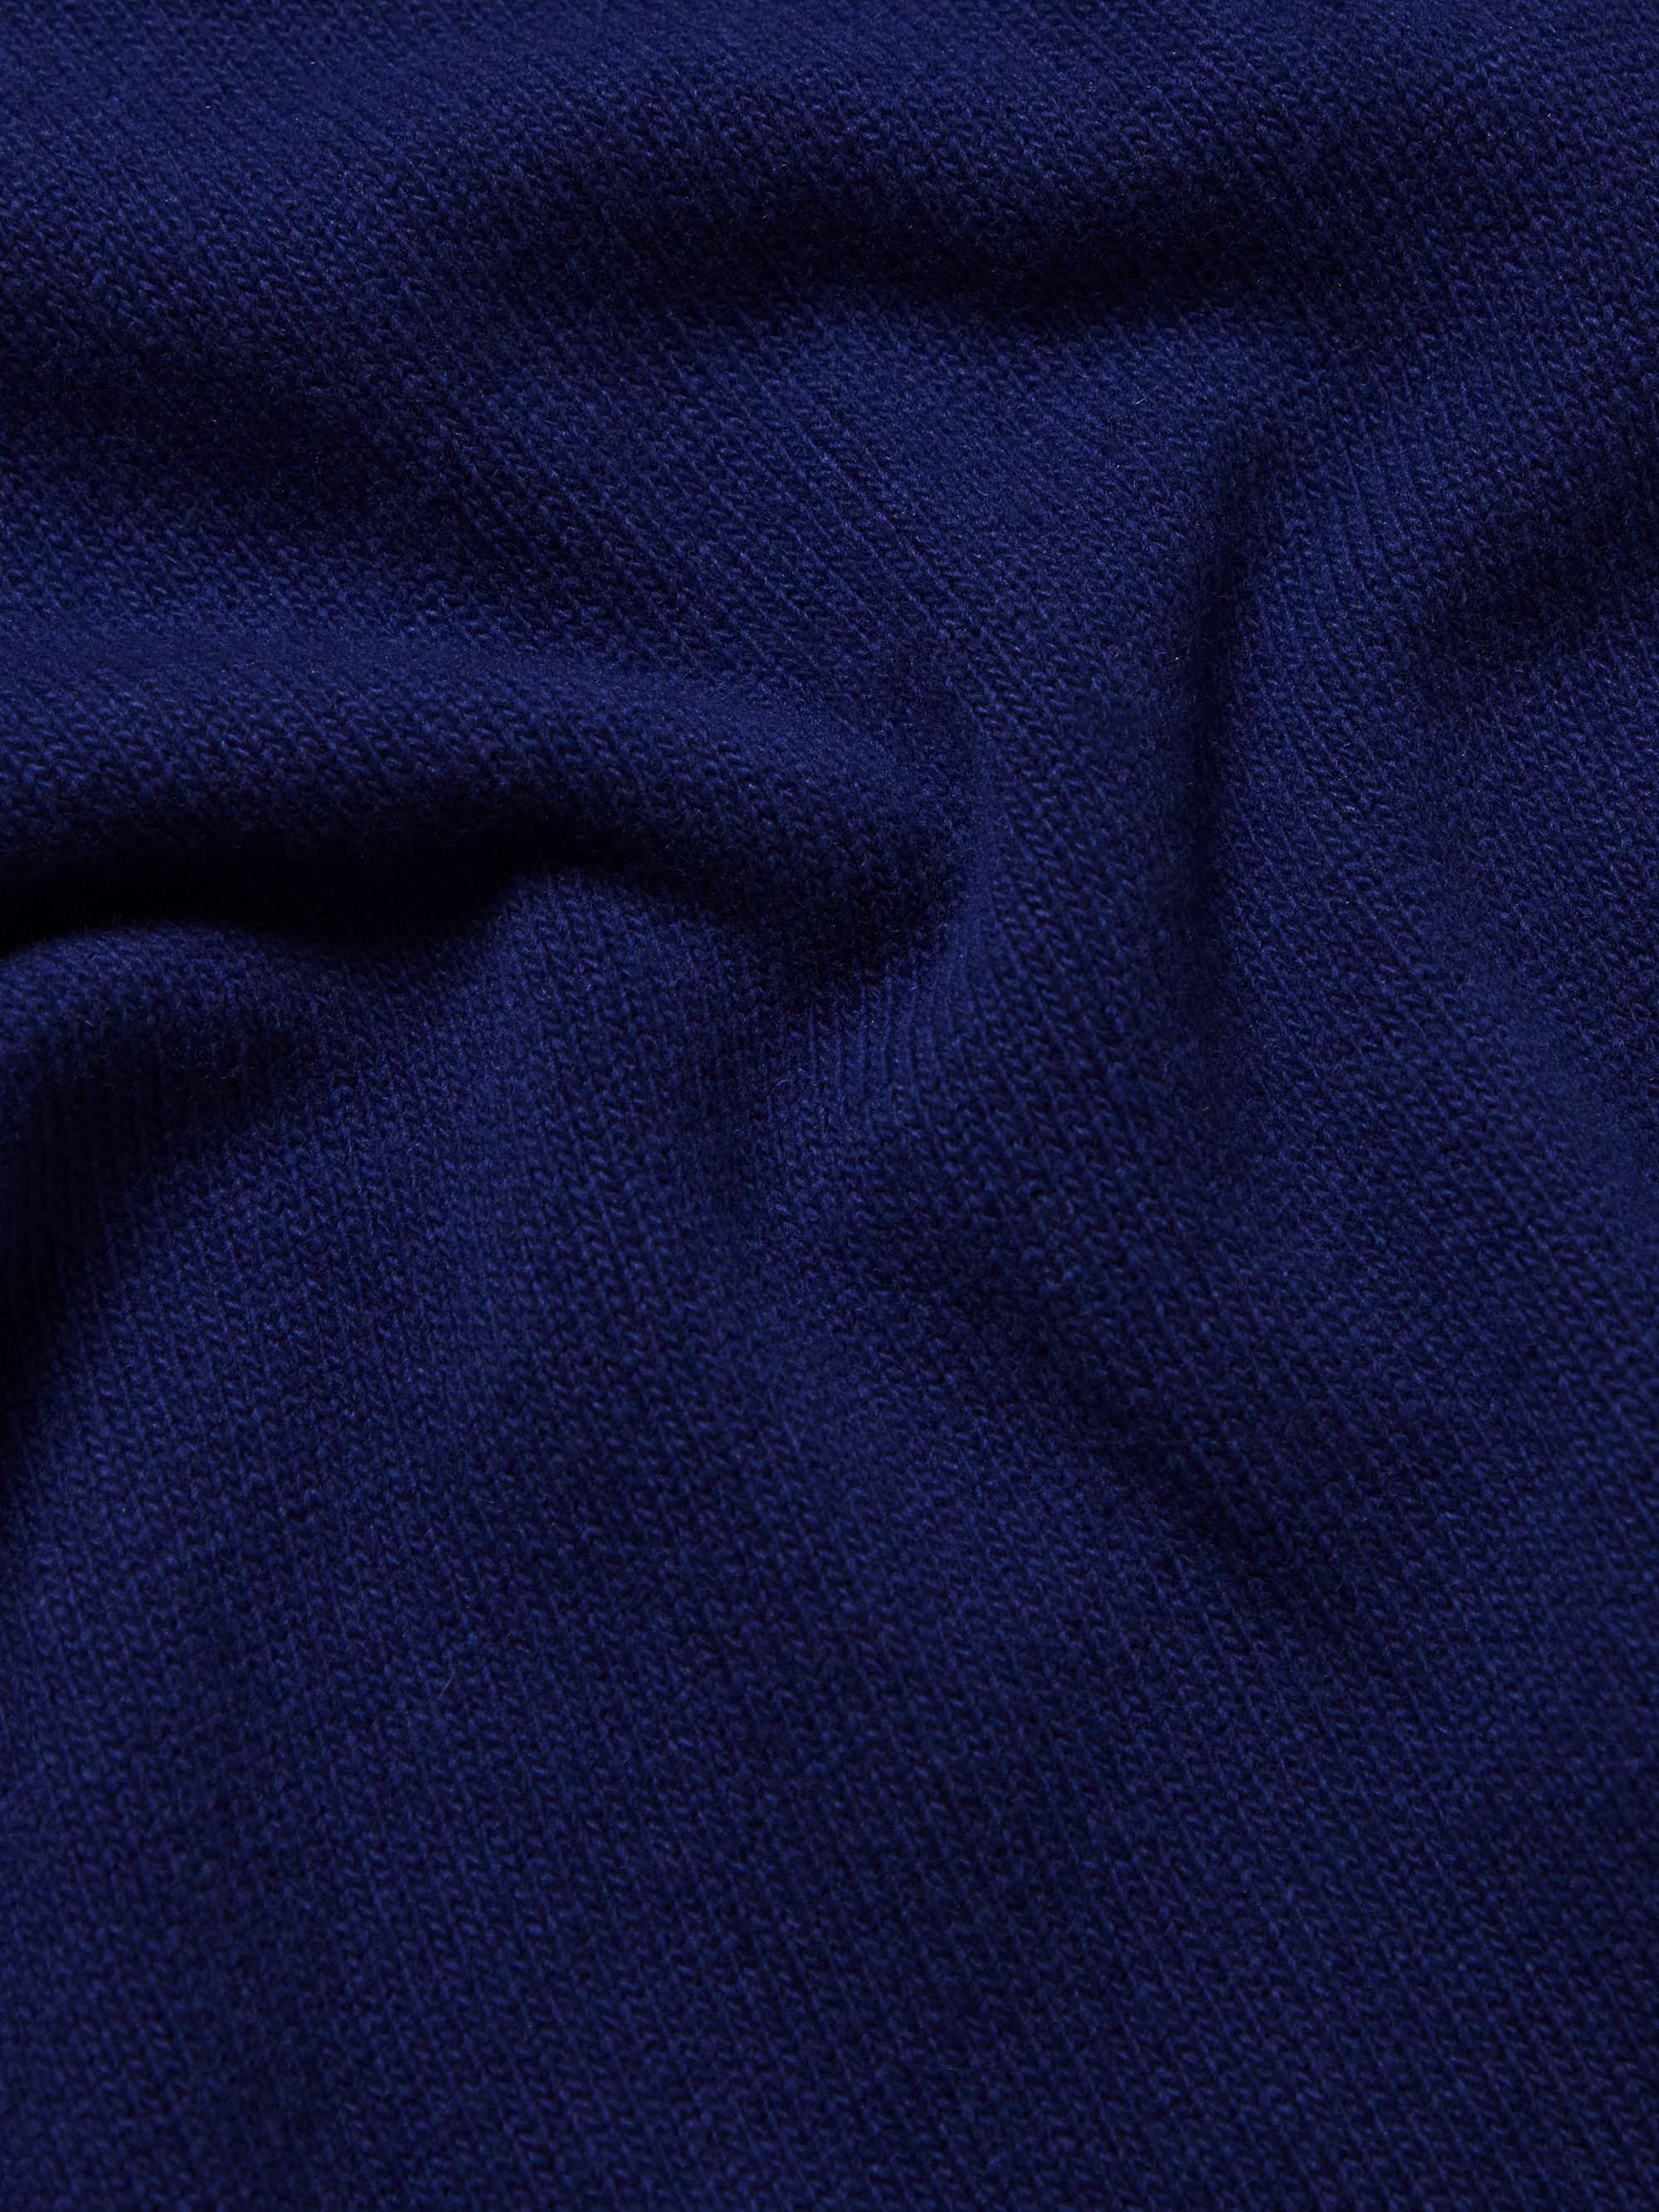 C.P. COMPANY Wool-Blend Half-Zip Sweater